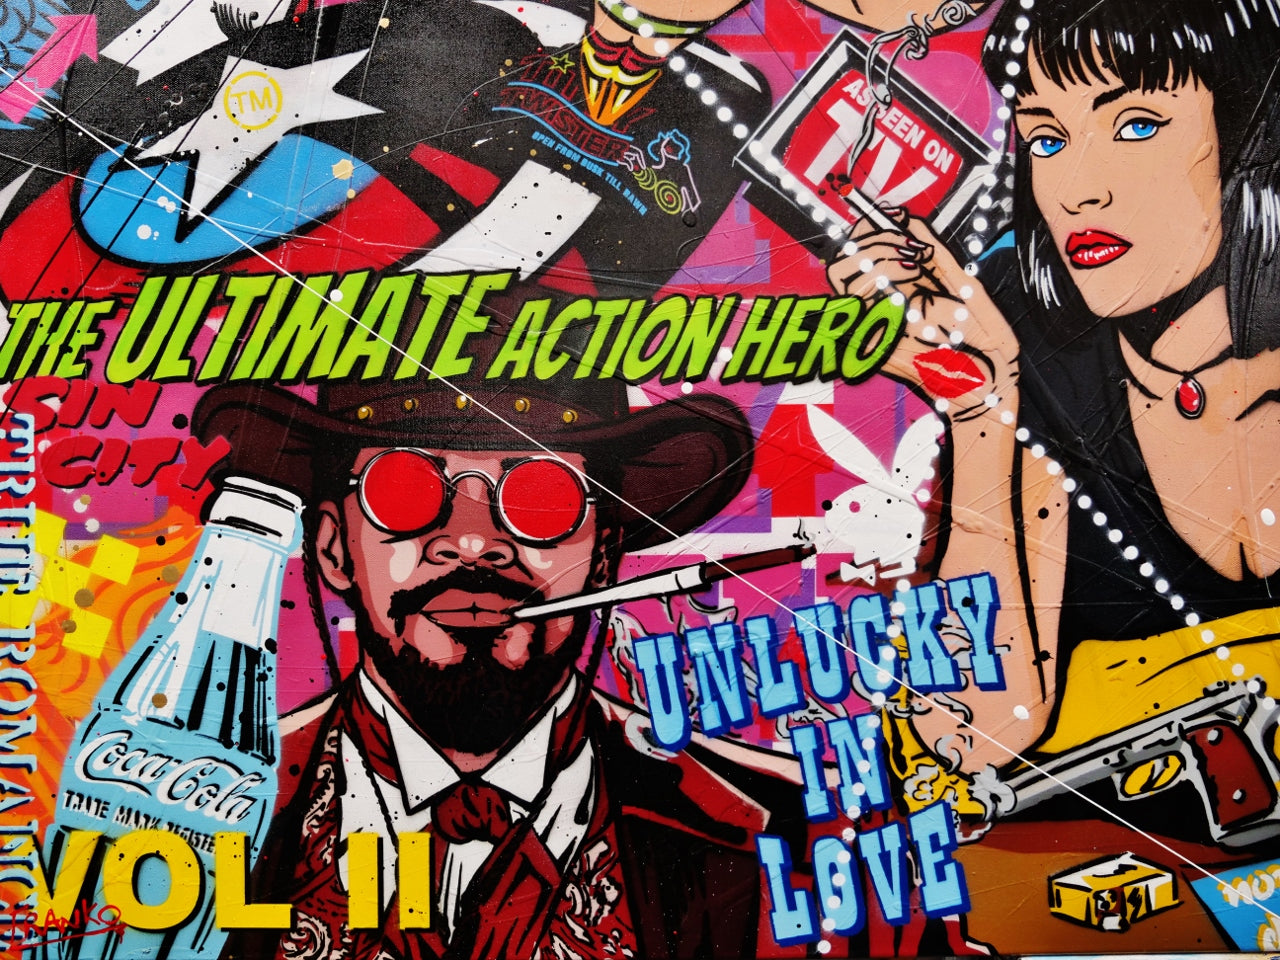 Tarantino Time 190cm x 100cm Django Pulp Fiction Textured Urban Pop Art Painting (SOLD)